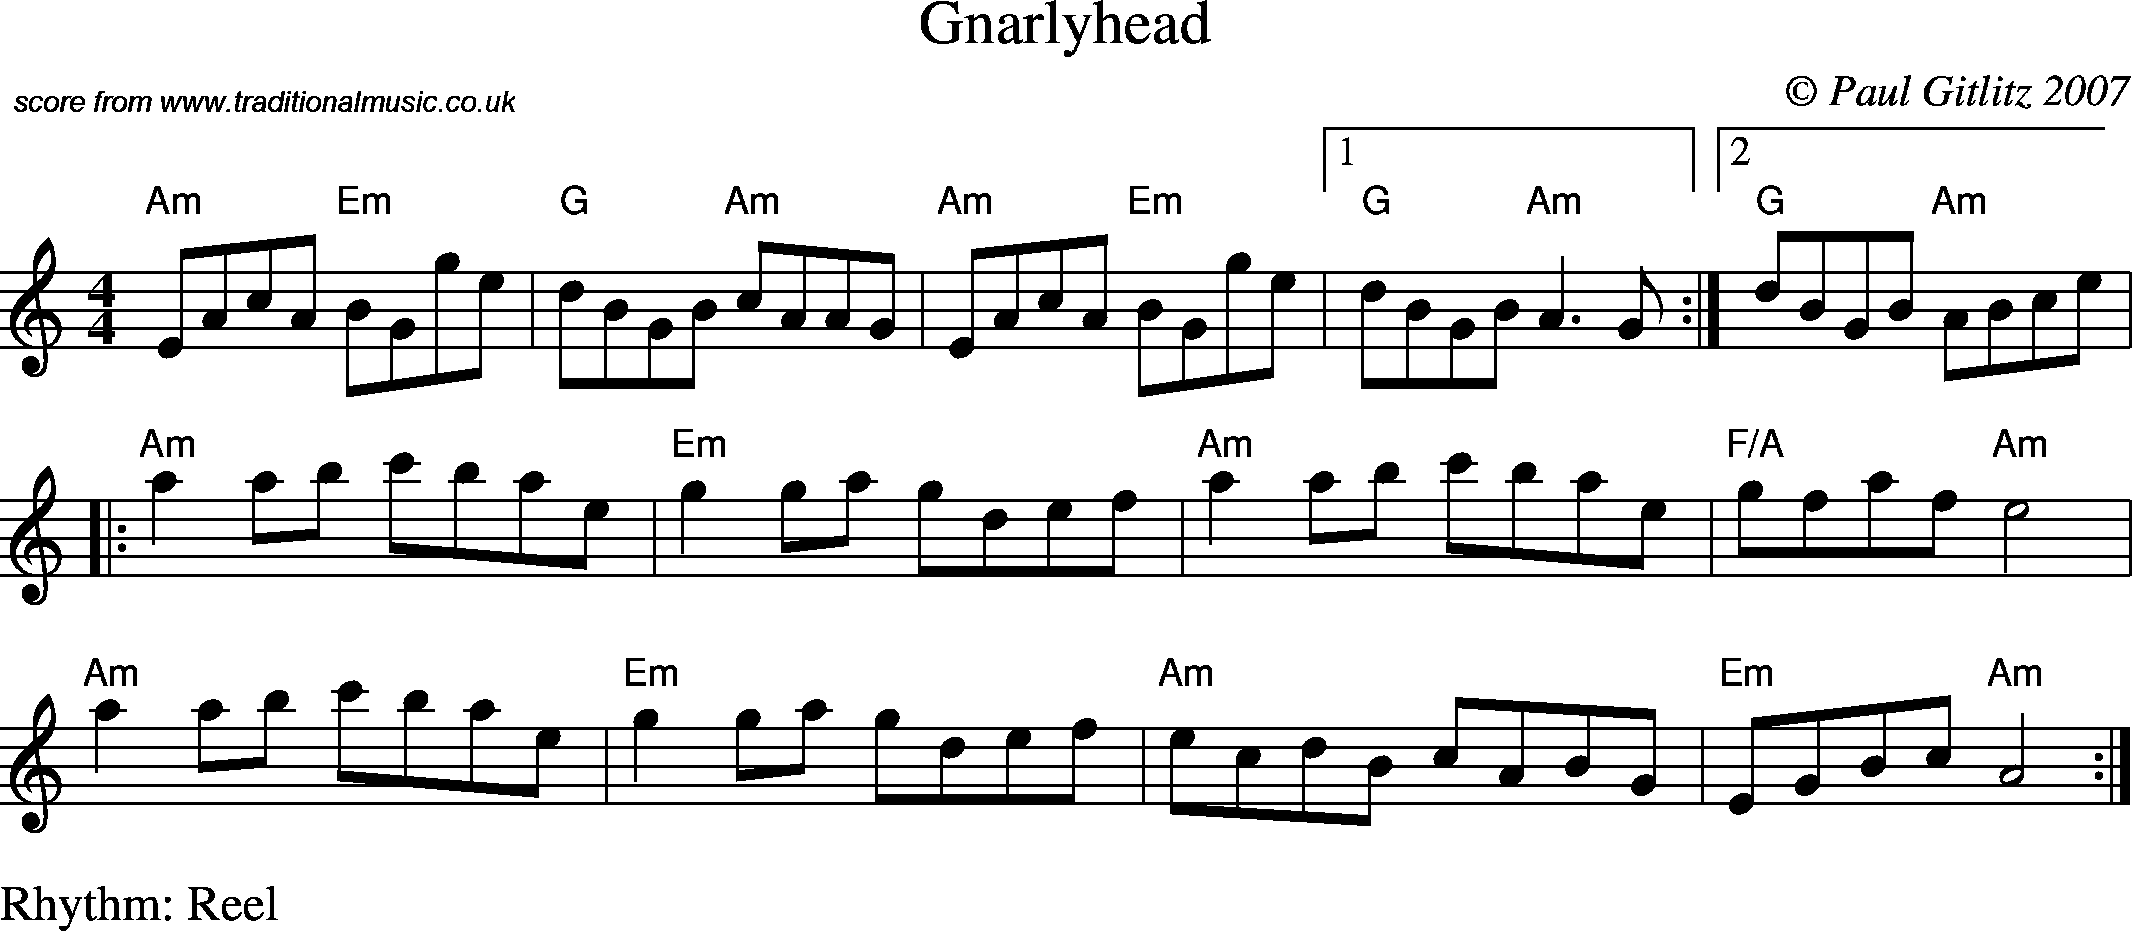 Sheet Music Score for Reel - Gnarlyhead